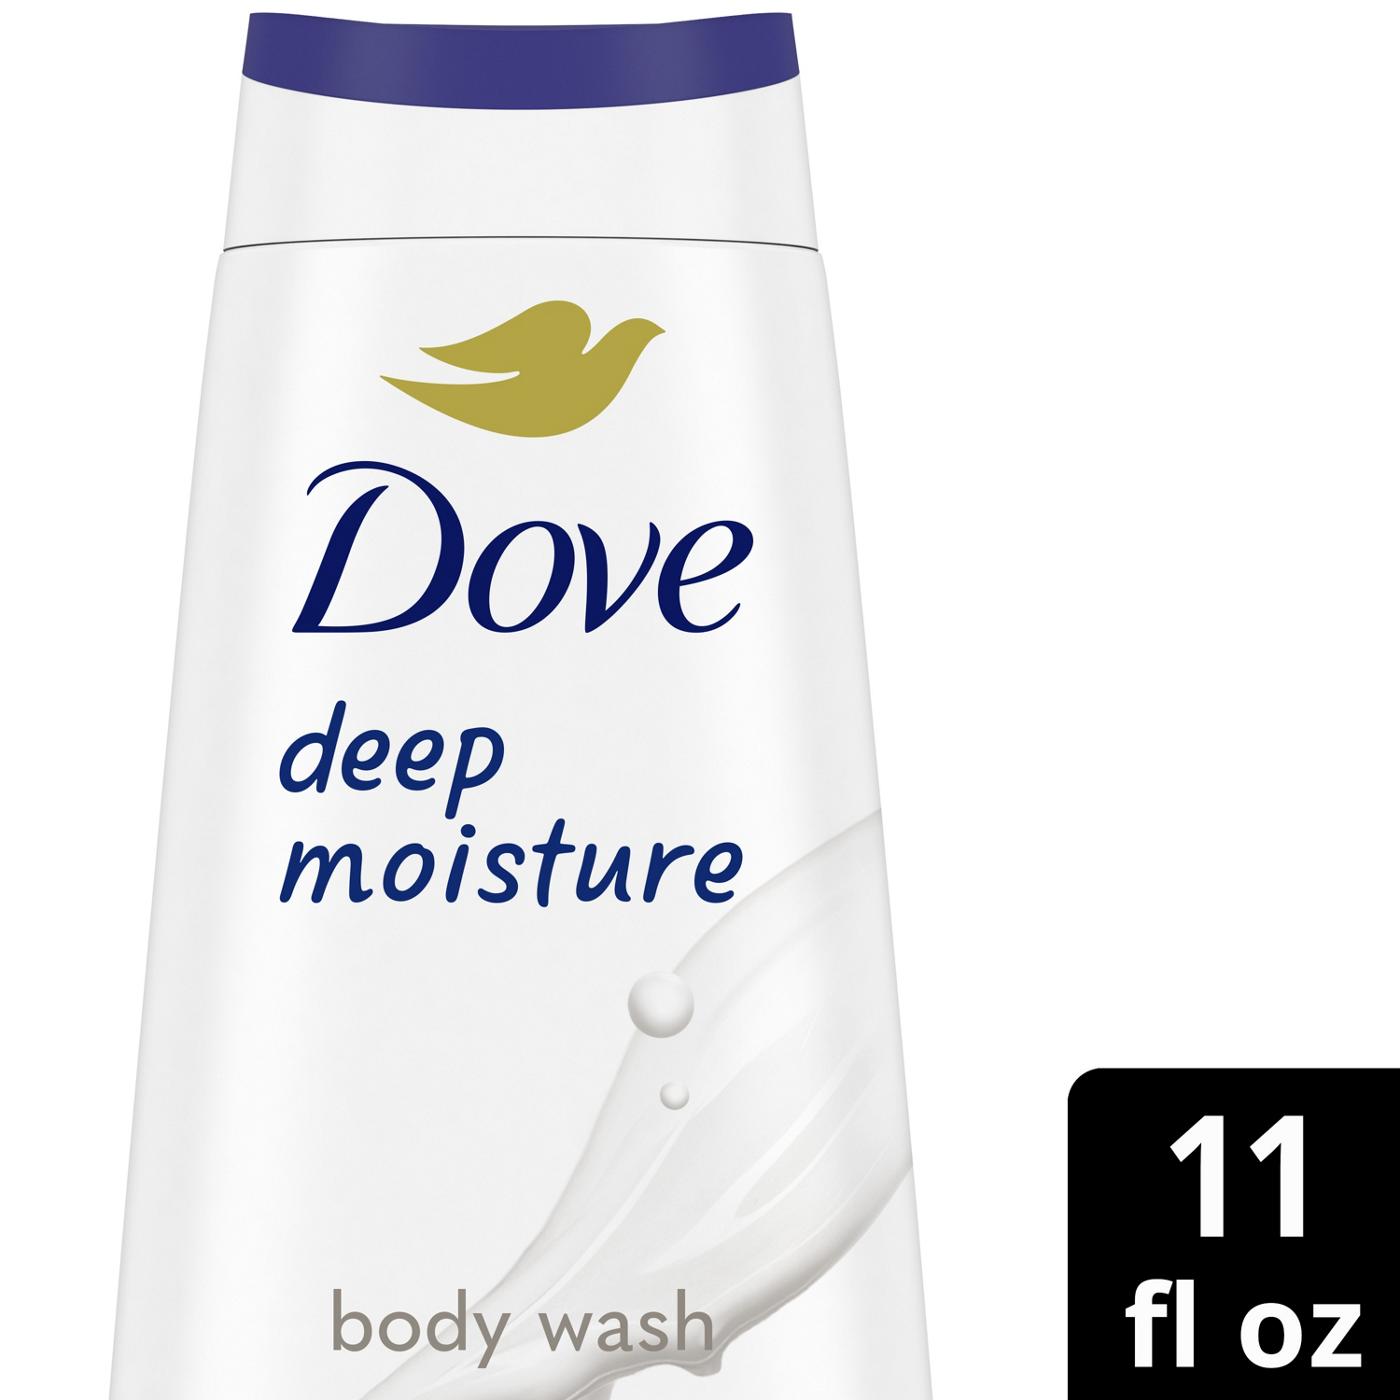 Dove Deep Moisture Body Wash; image 7 of 8